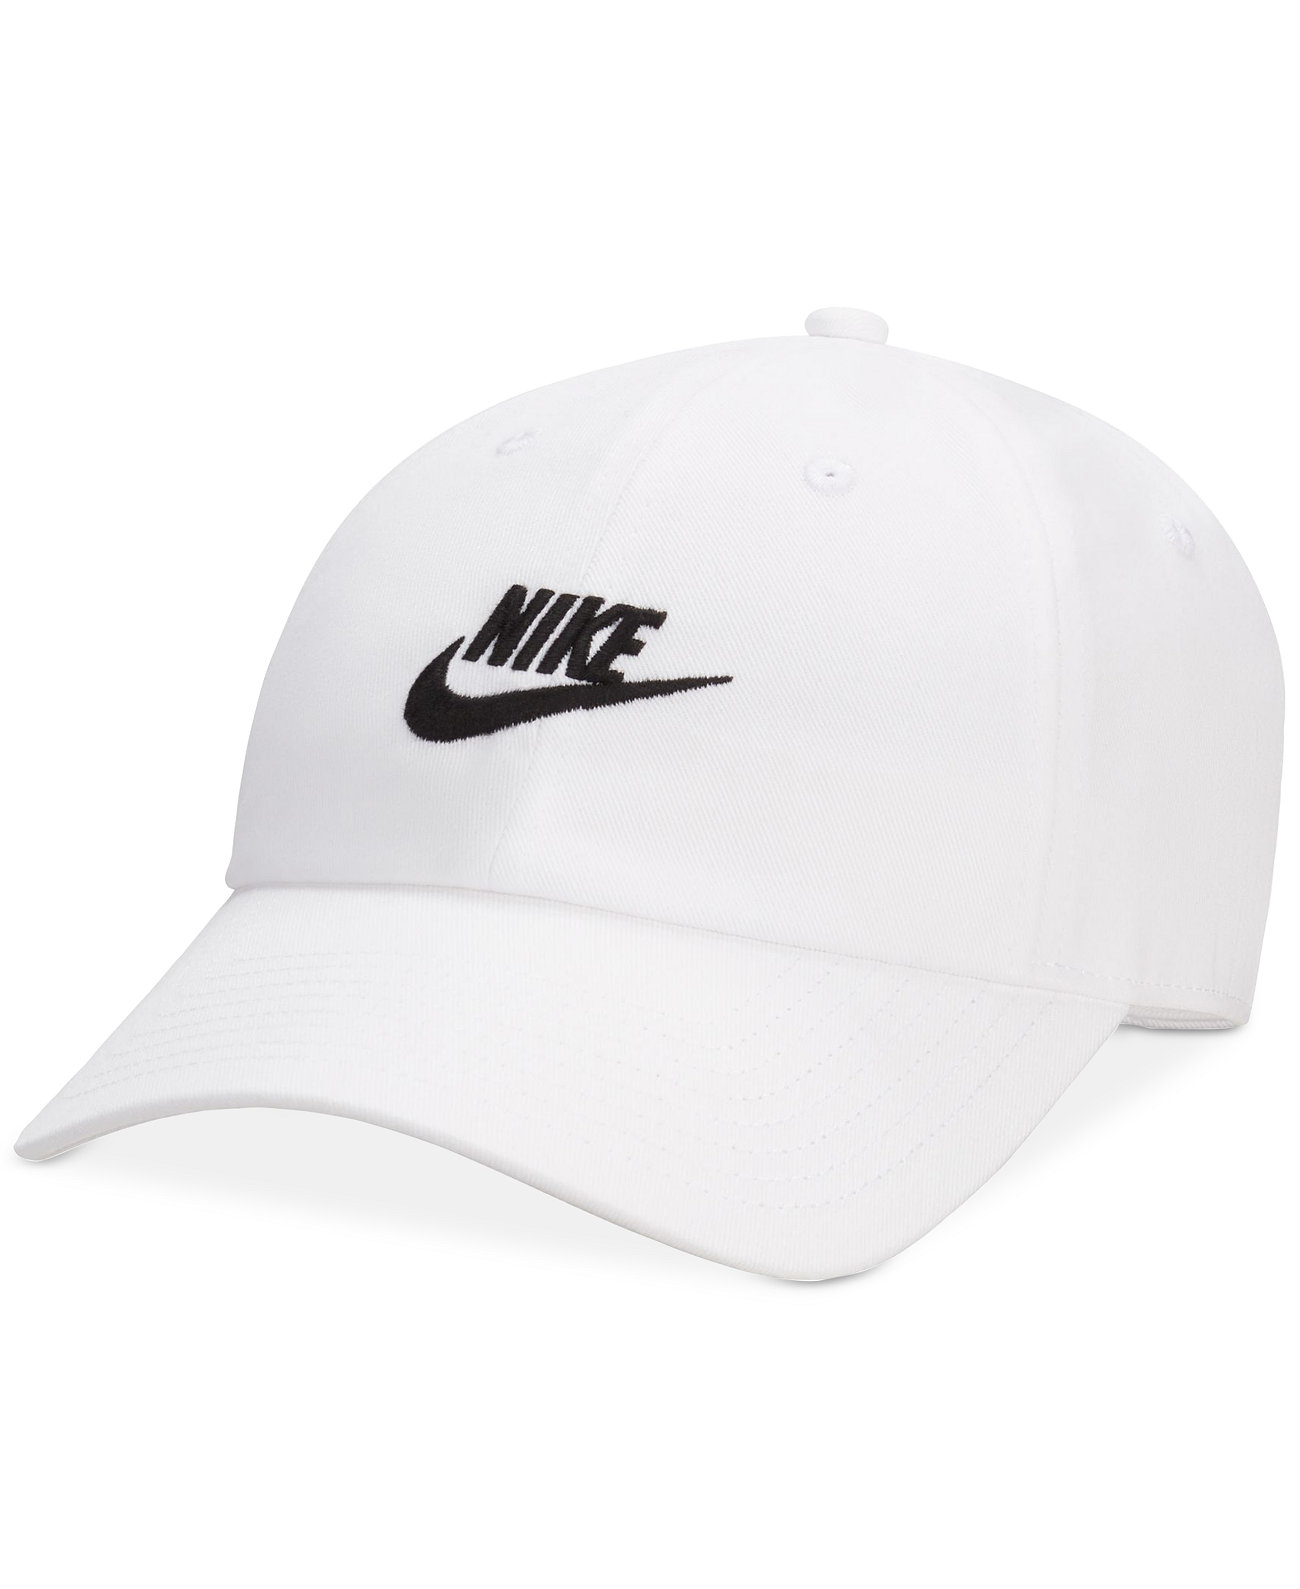 Мужская кепка с вышитым логотипом Club Nike